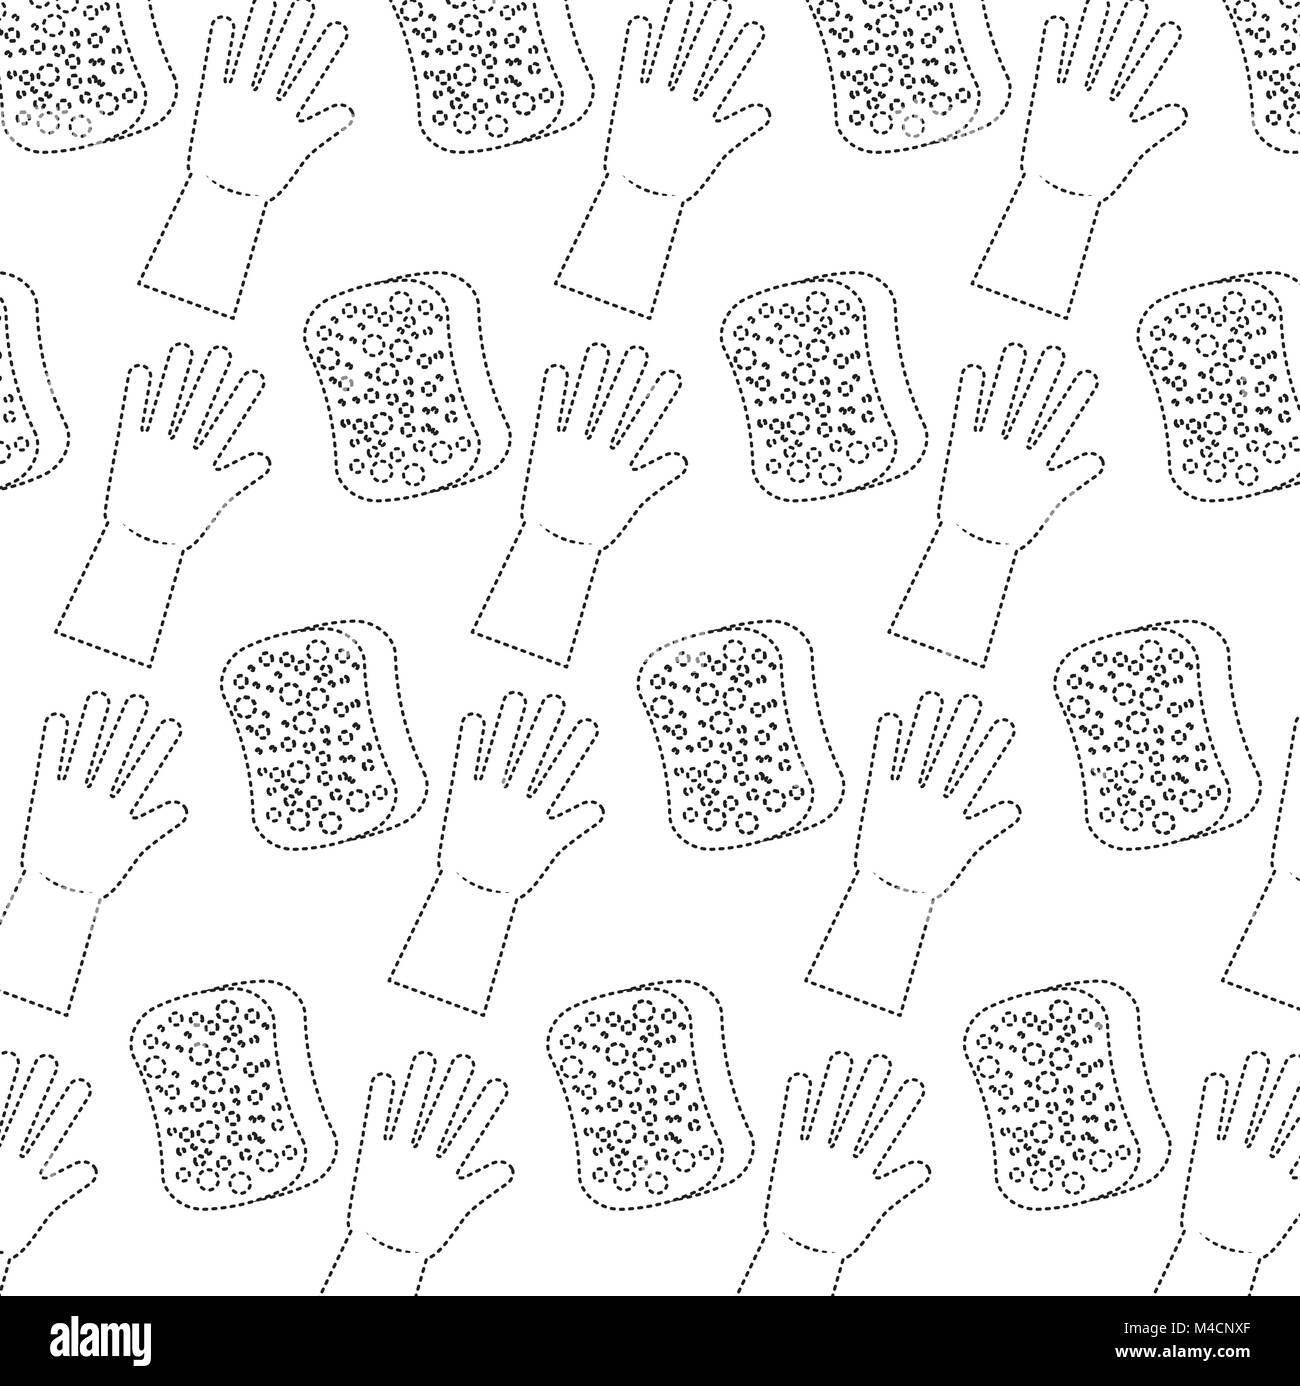 cleaning hygiene sponge and gloves wallpaper vector illustration Stock Vector